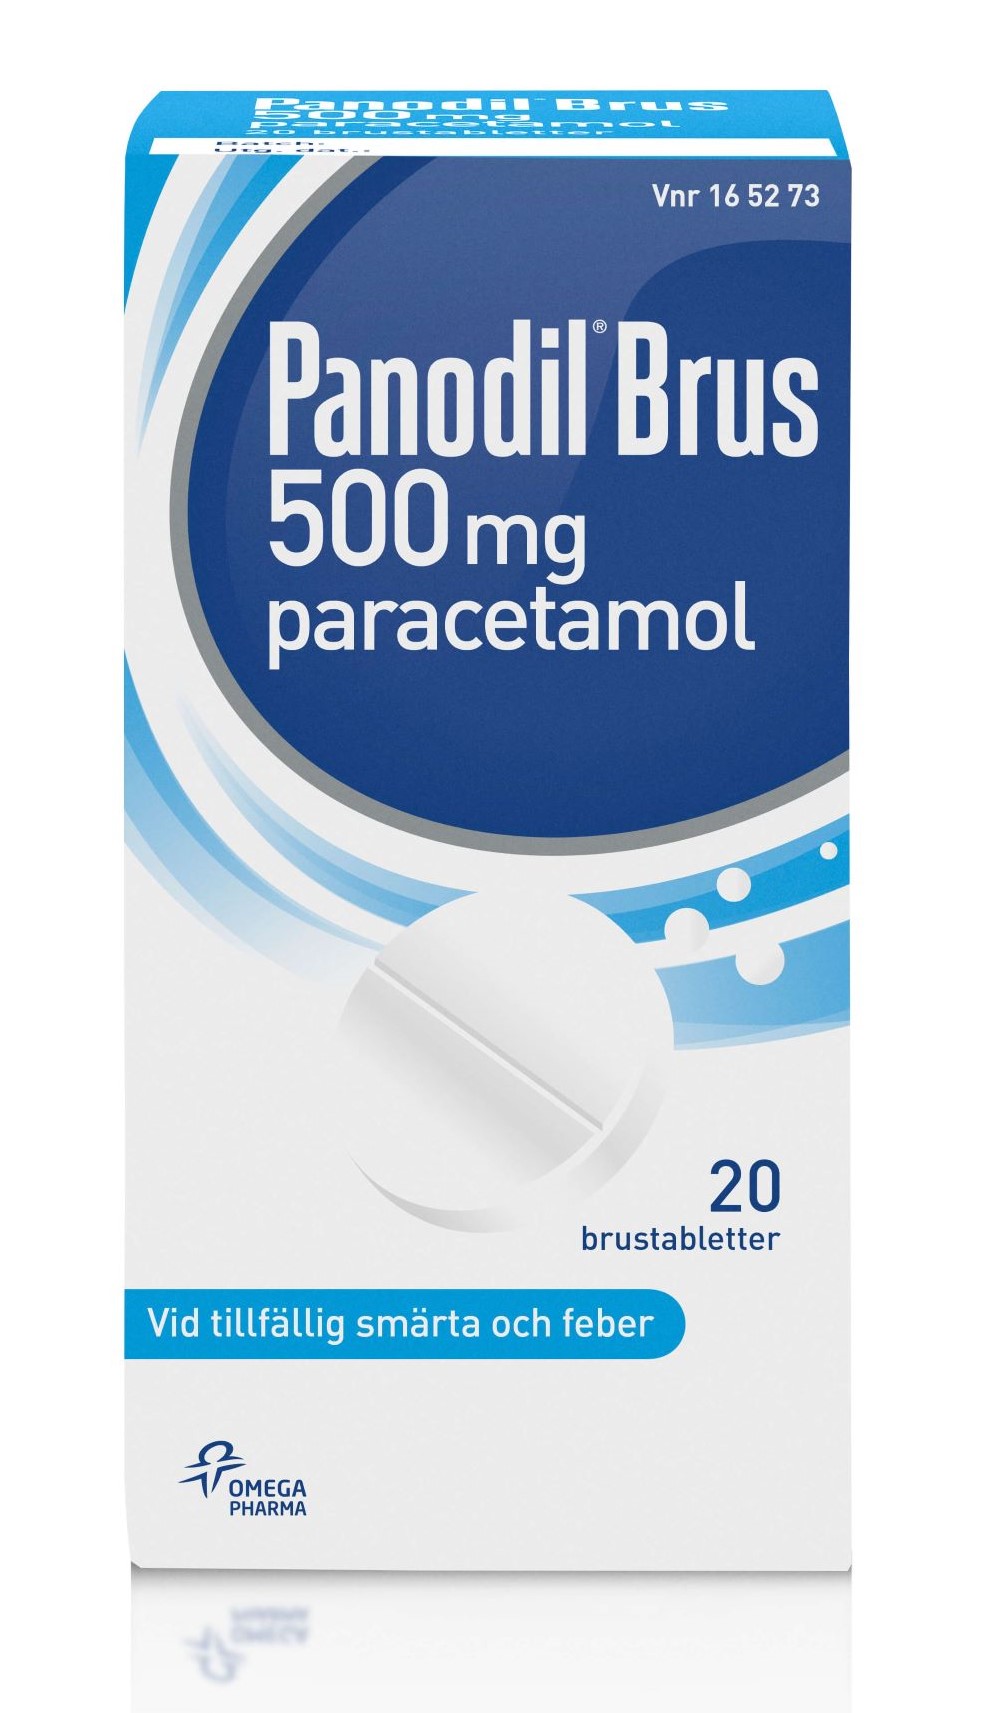 Panodil Brus 500mg 20st brustabletter